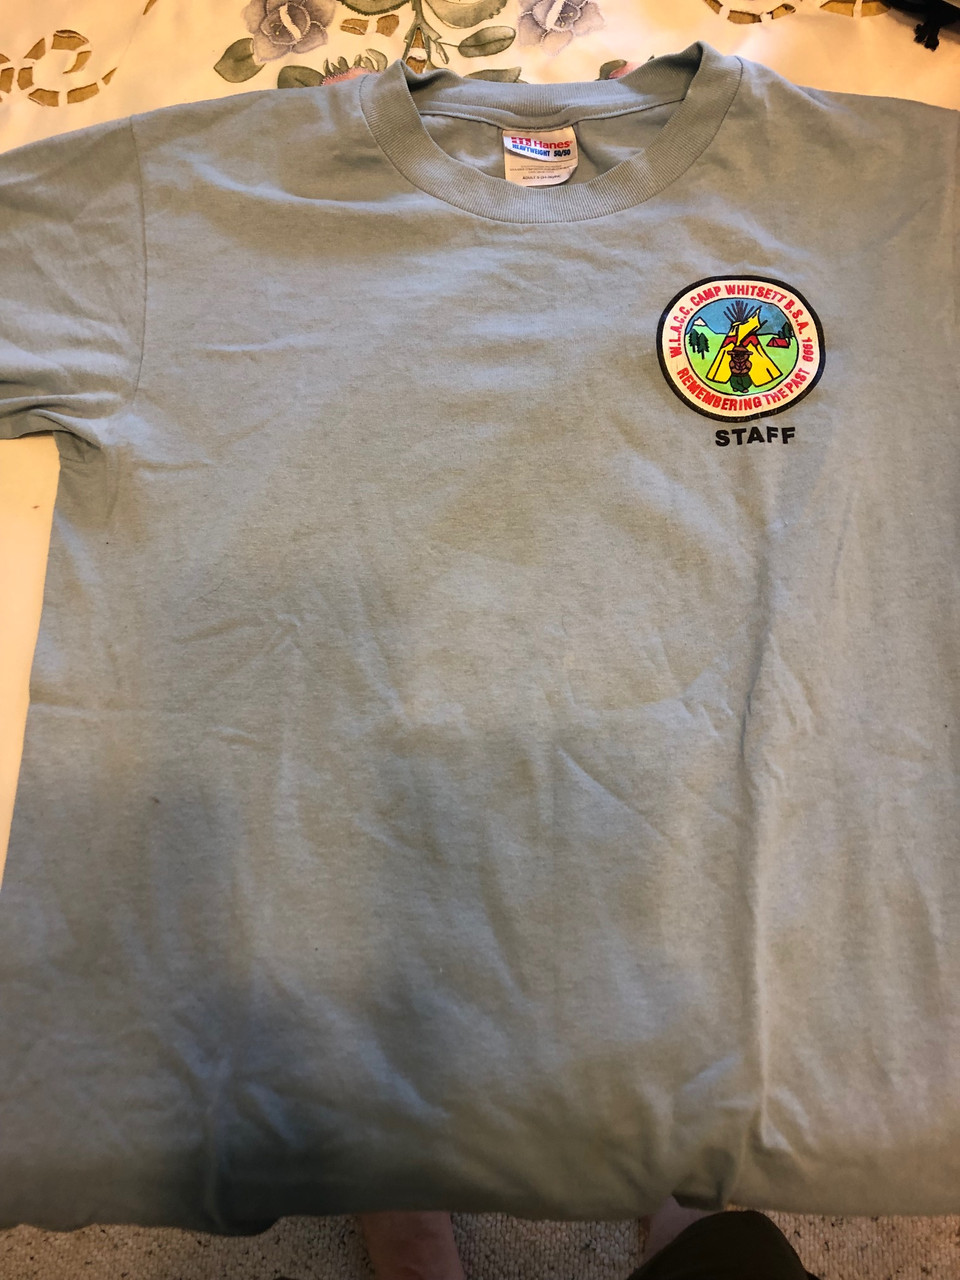 1999 Camp Whitsett STAFF Tee Shirt, Mens Small, Lite Use